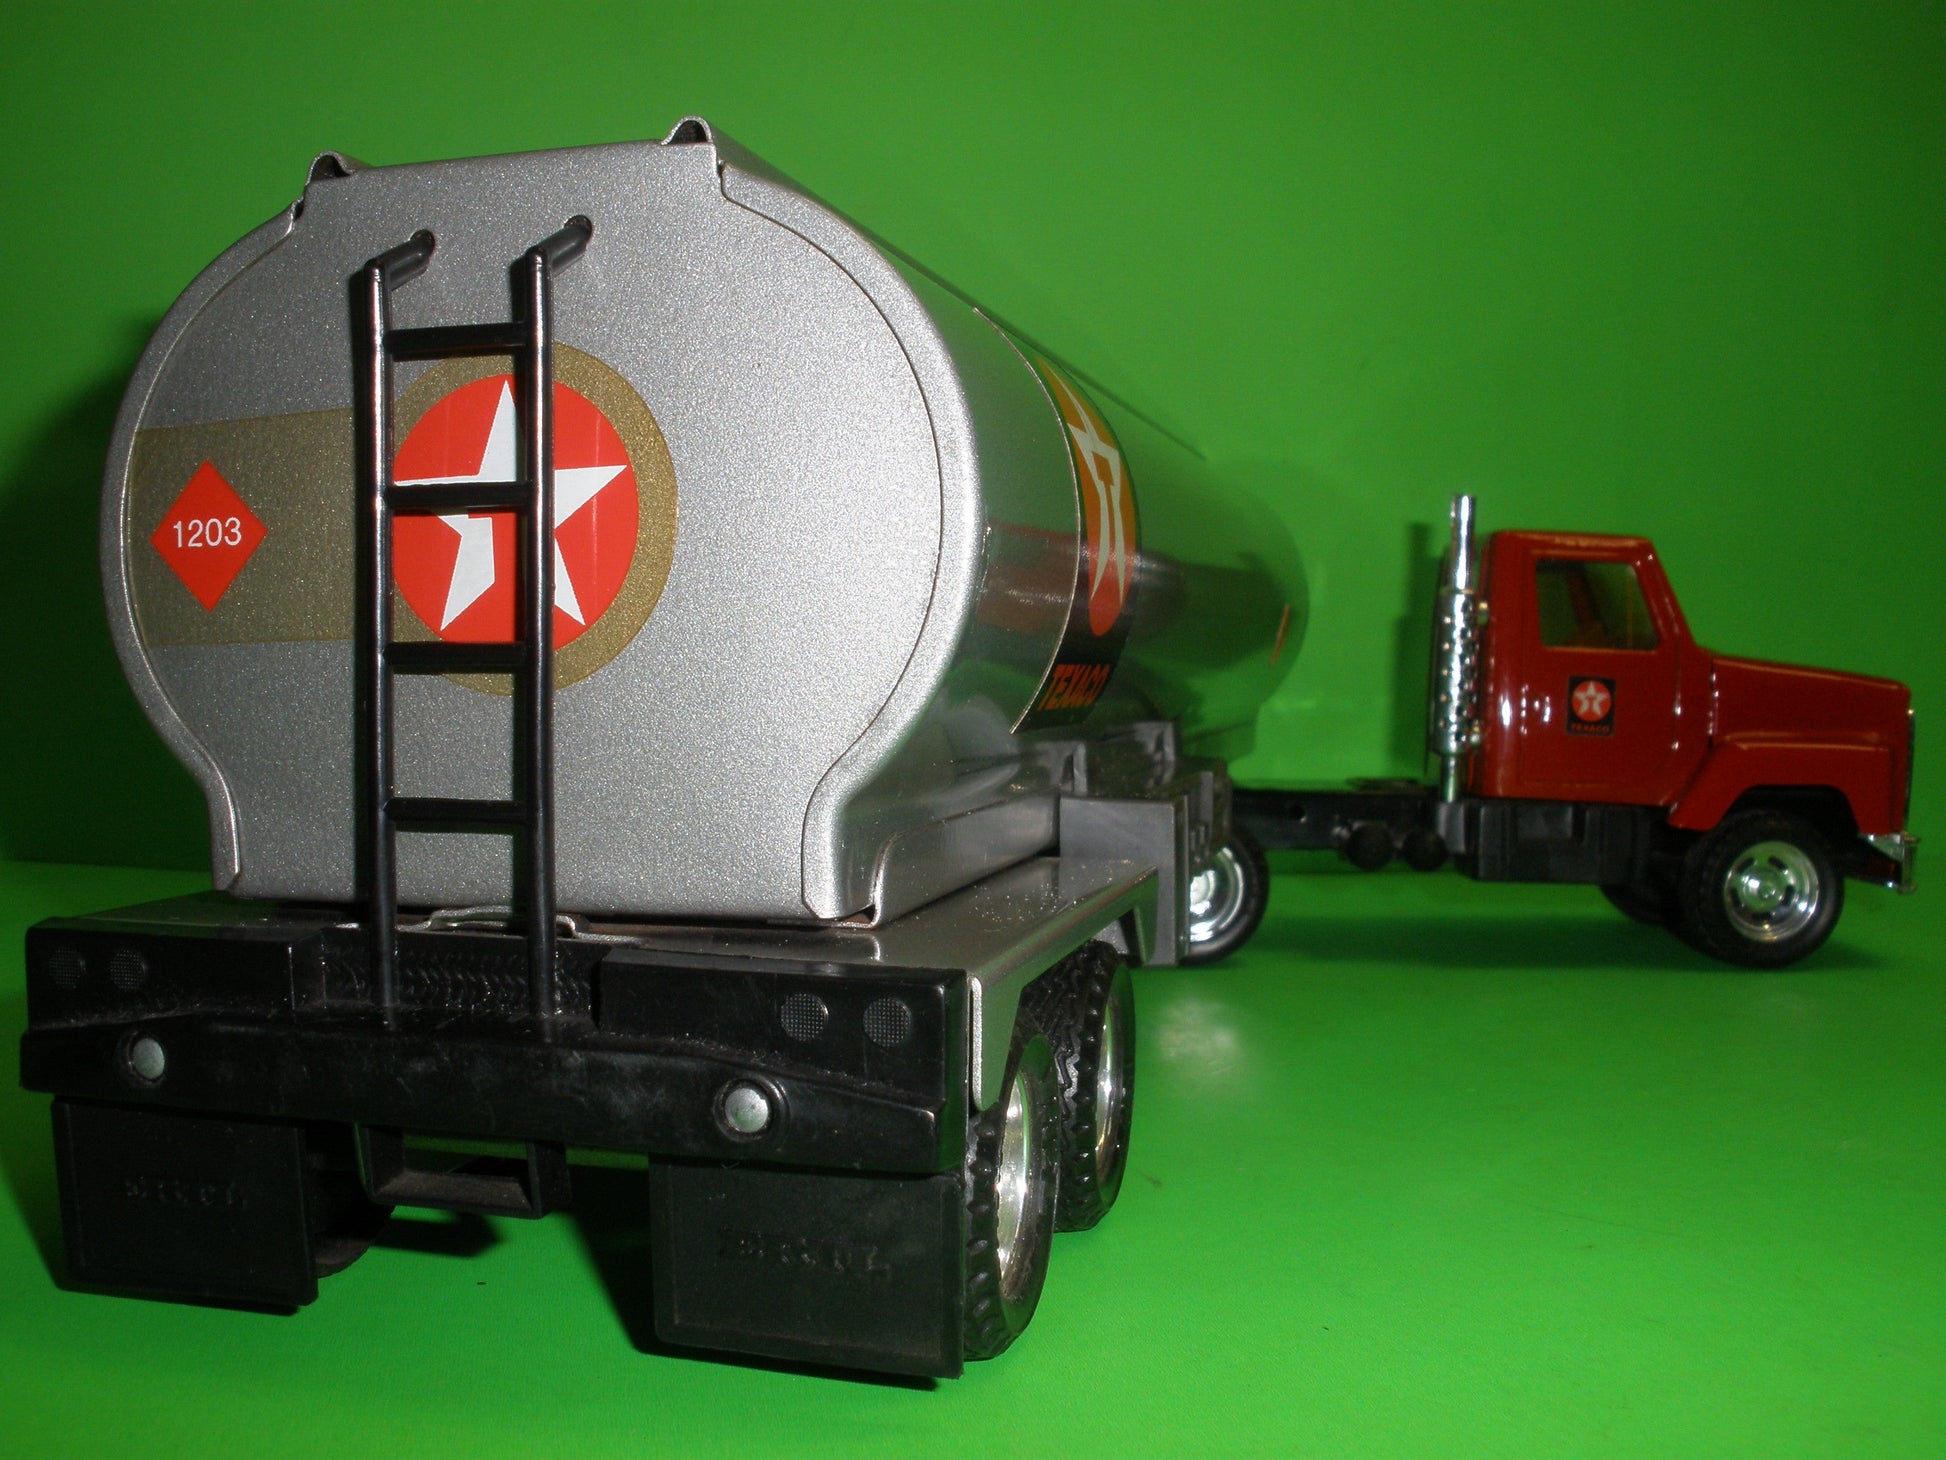 Texaco Pressed Steel Tanker Truck Red Cab